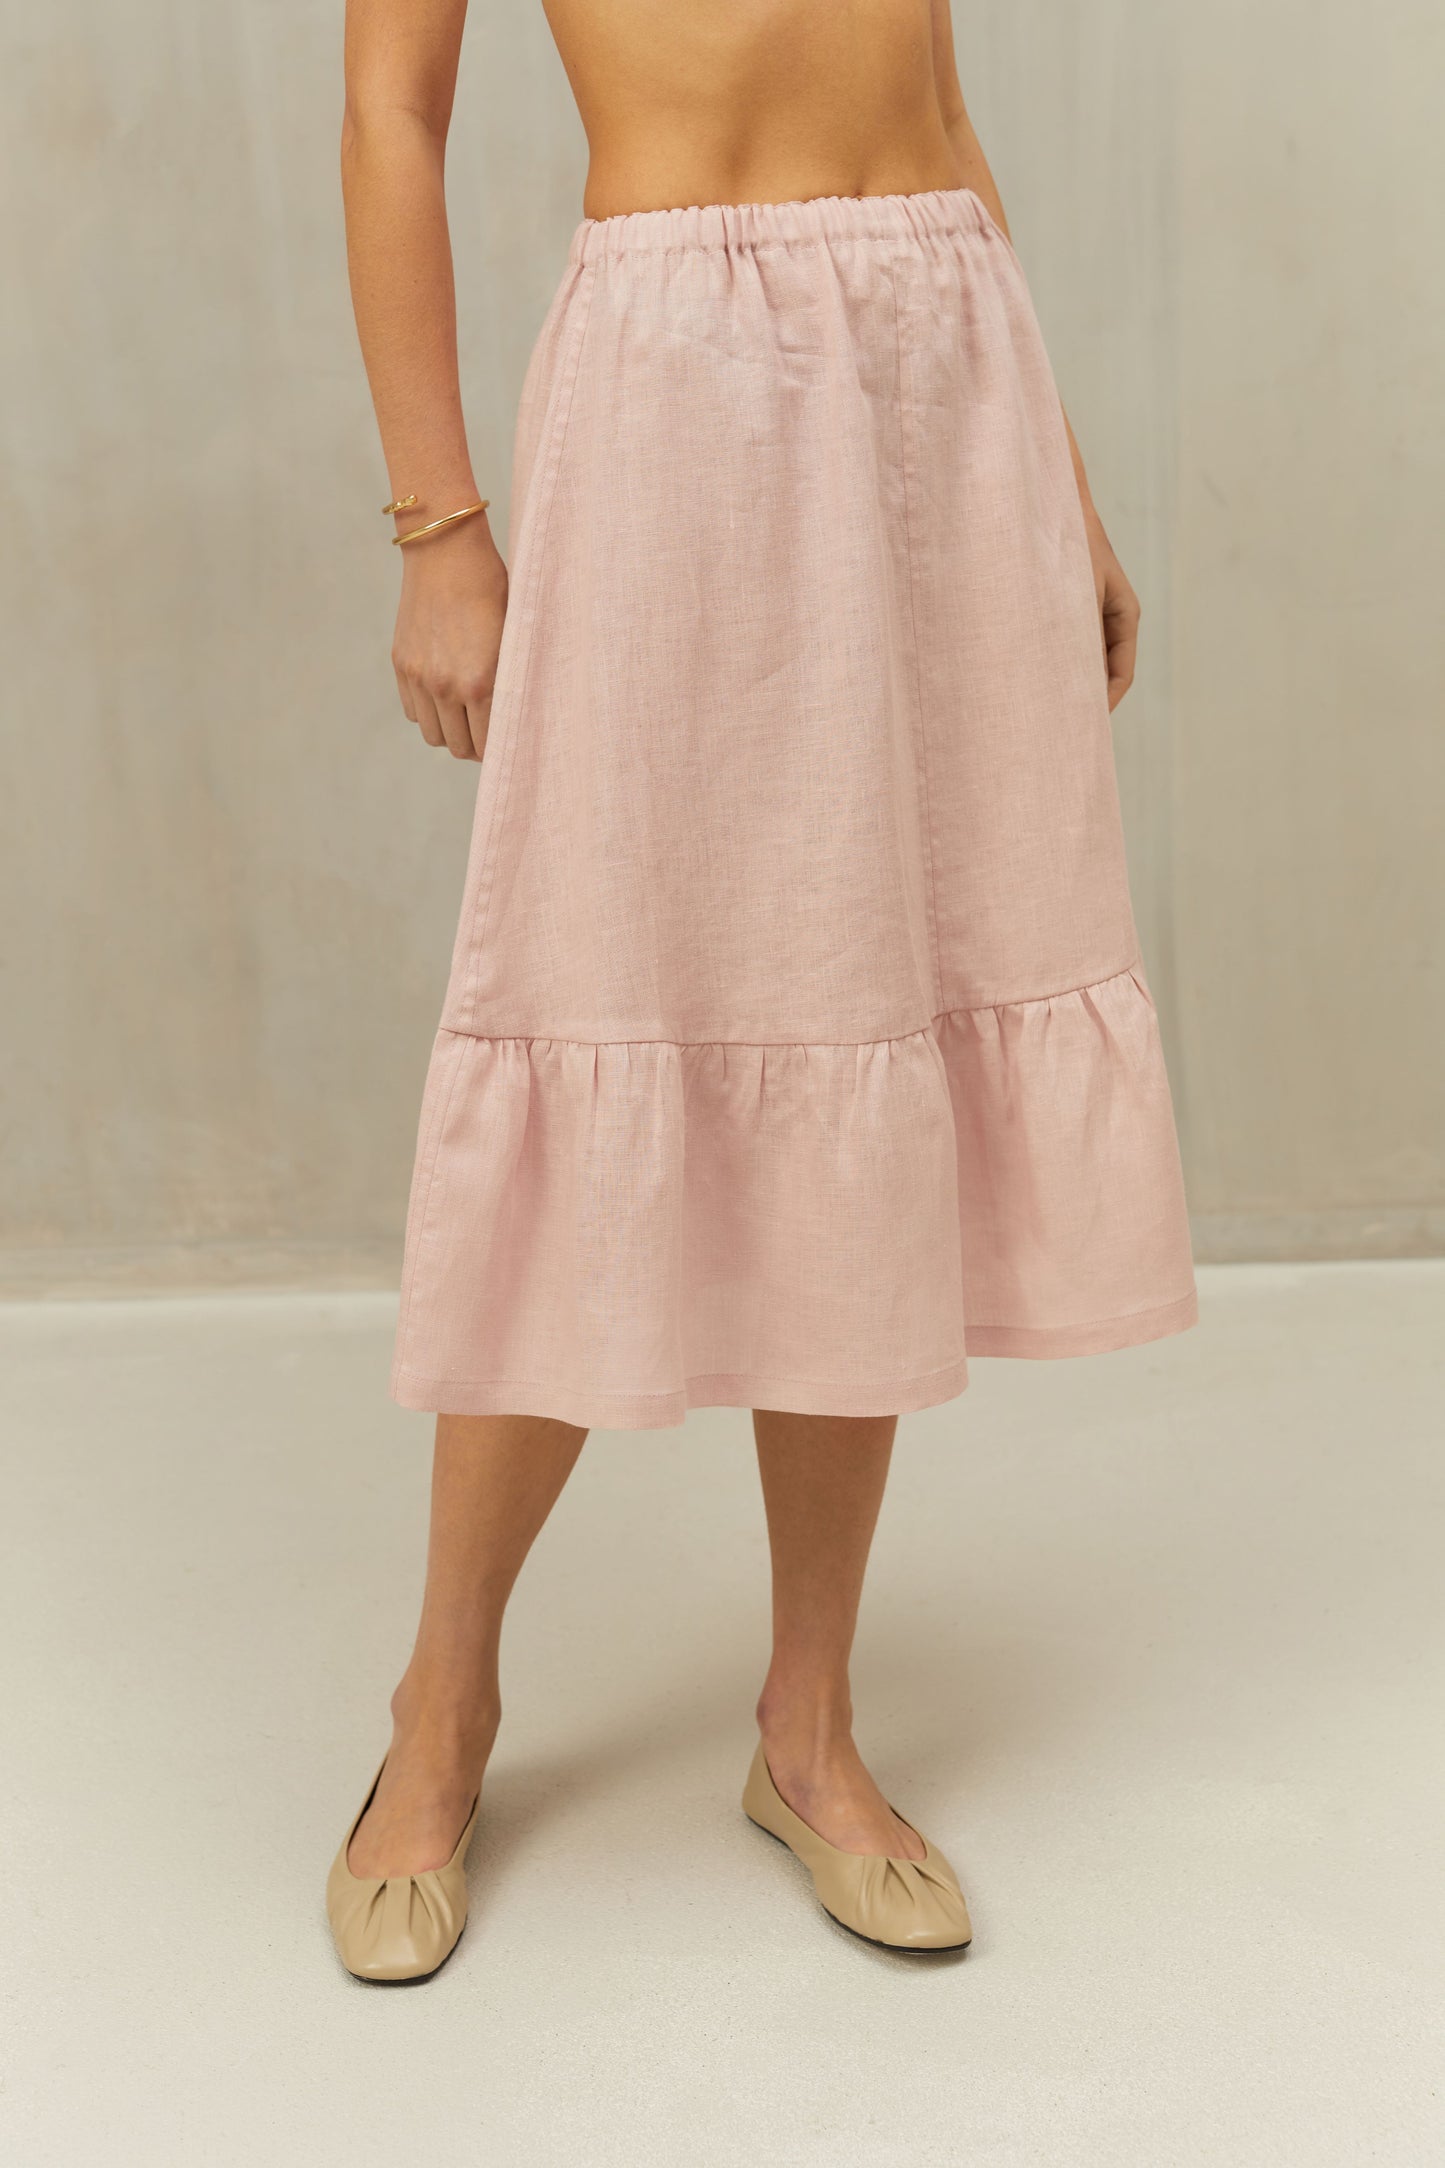 Linen Half Slip/Petticoat Underskirt